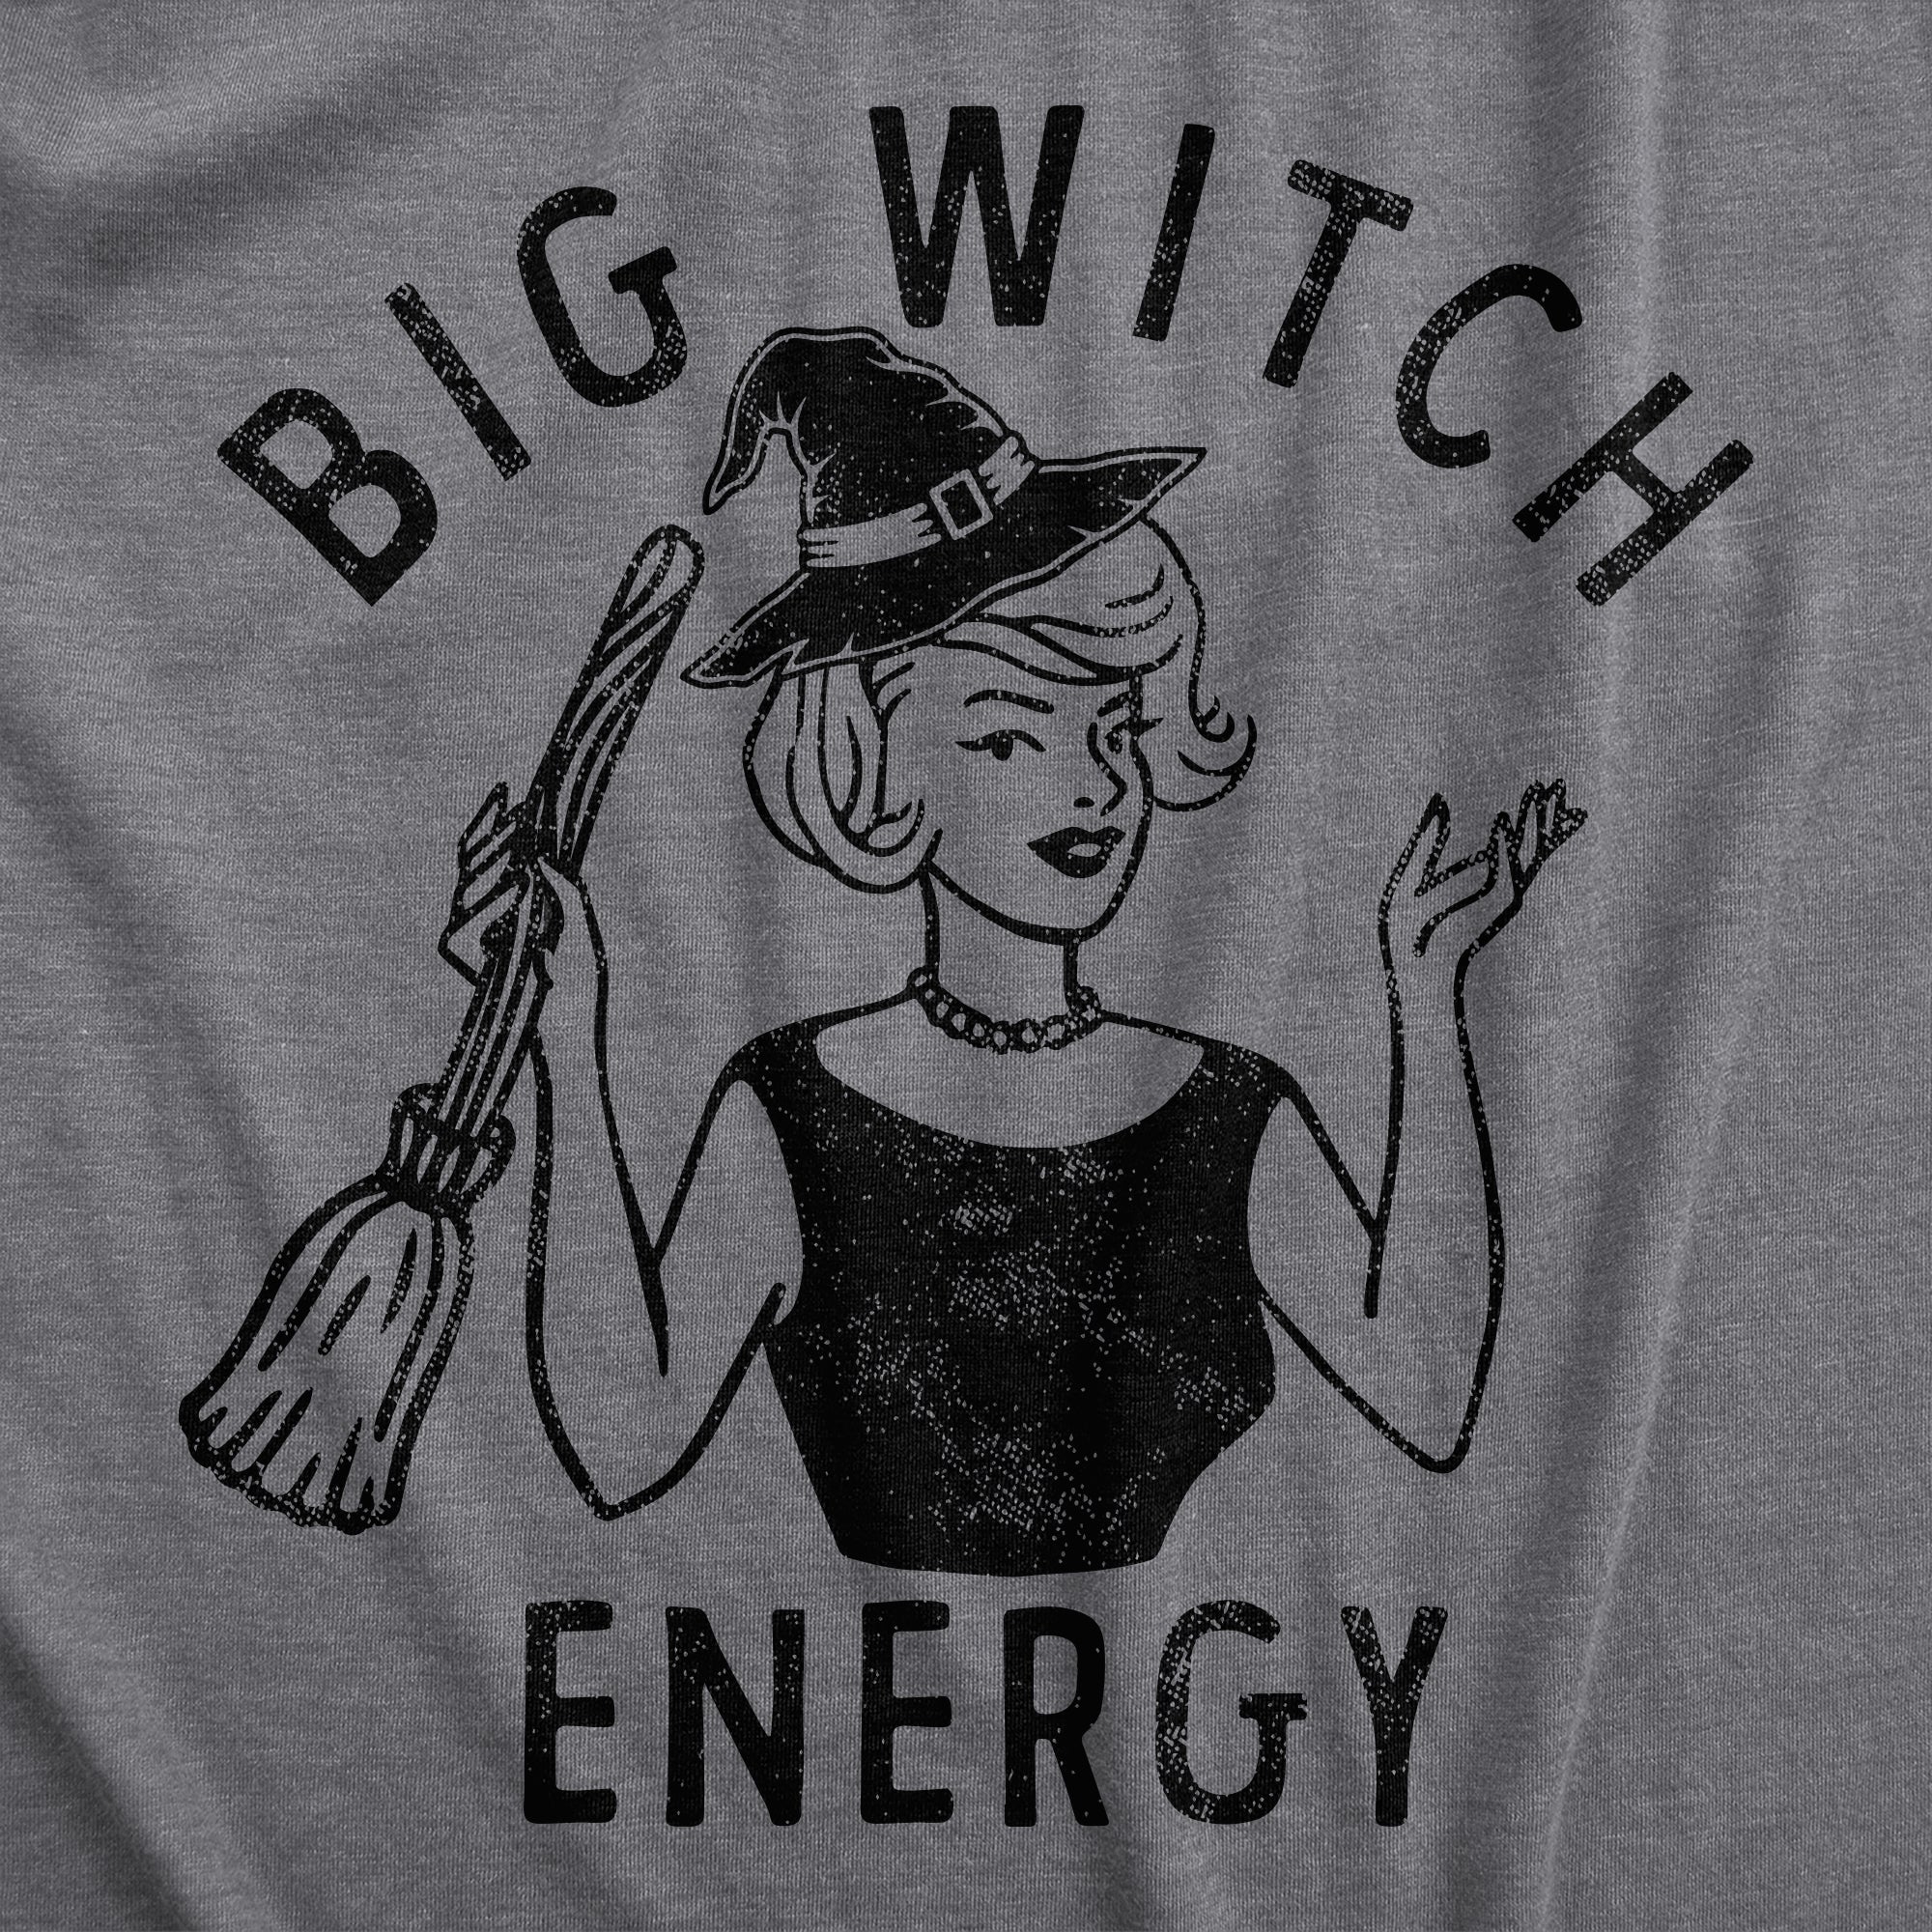 Funny Dark Heather Grey - WITCH Big Witch Energy Womens T Shirt Nerdy Halloween Sarcastic Tee